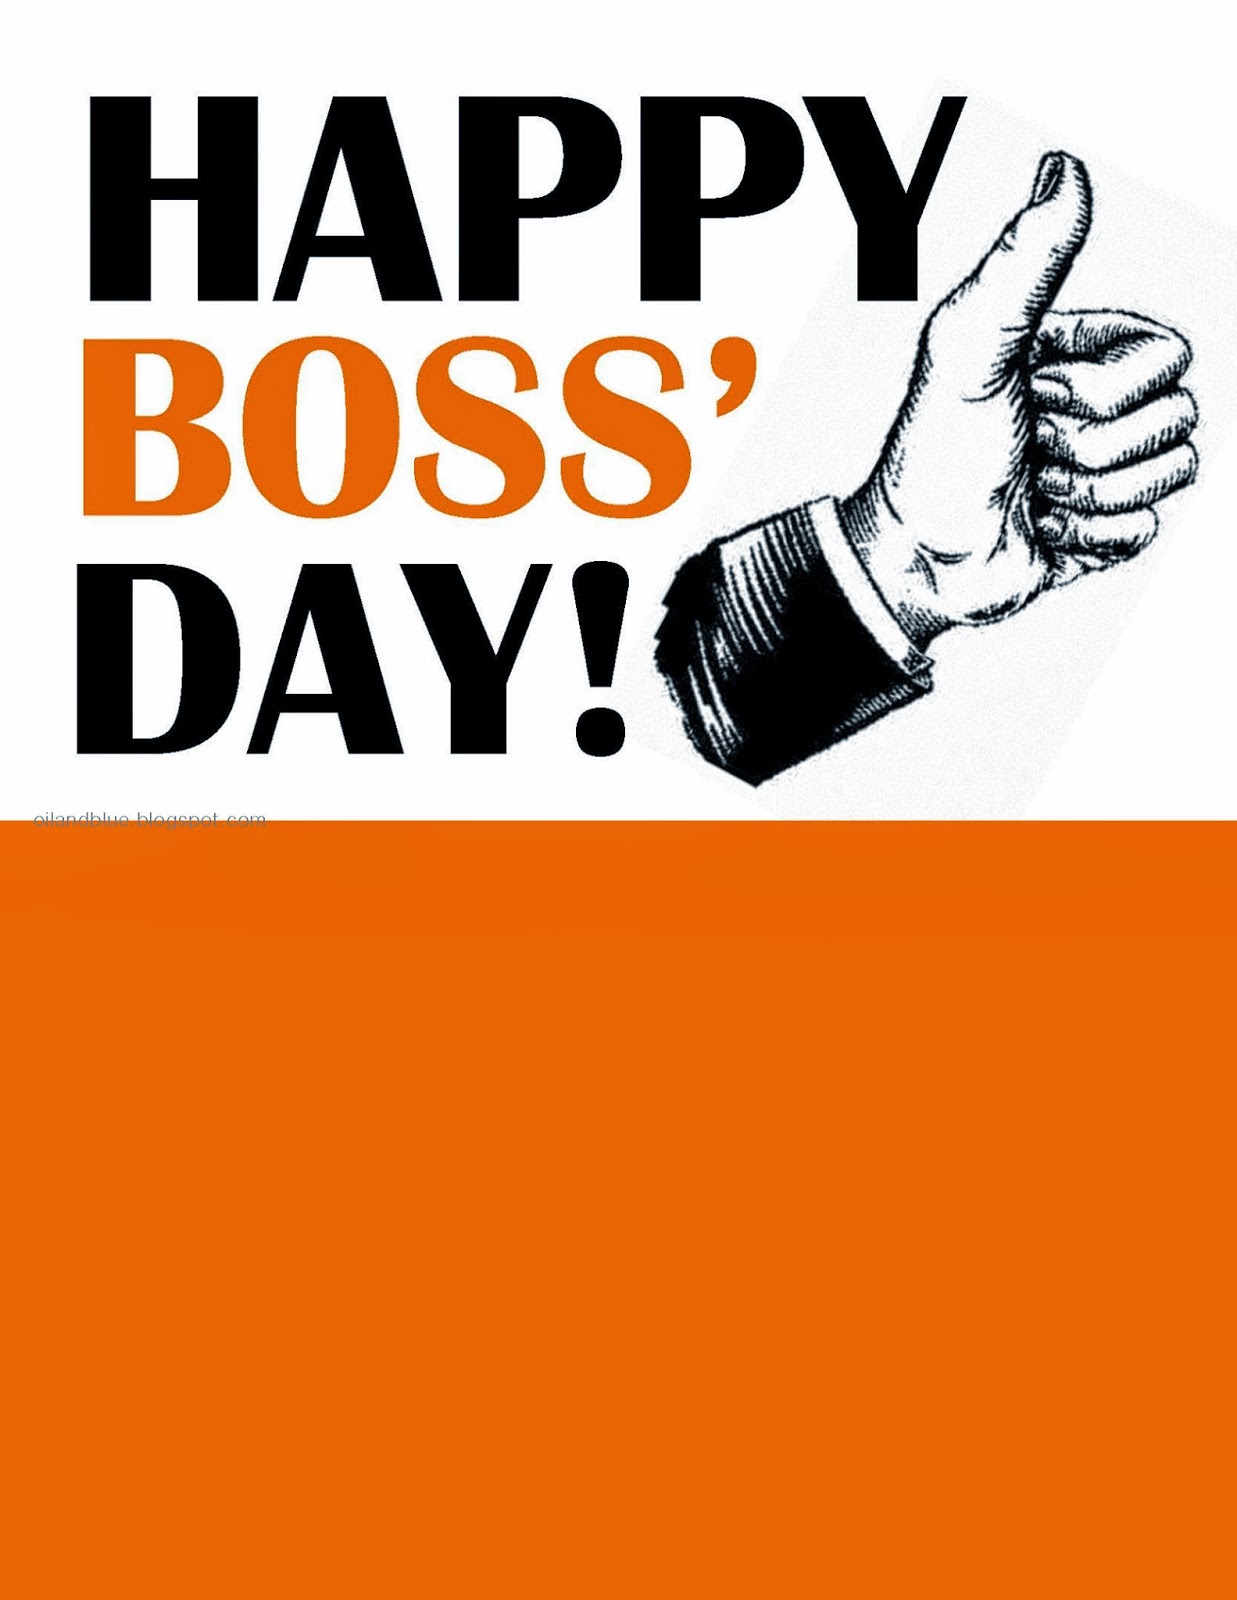 Printable Birthday Cards Free Boss